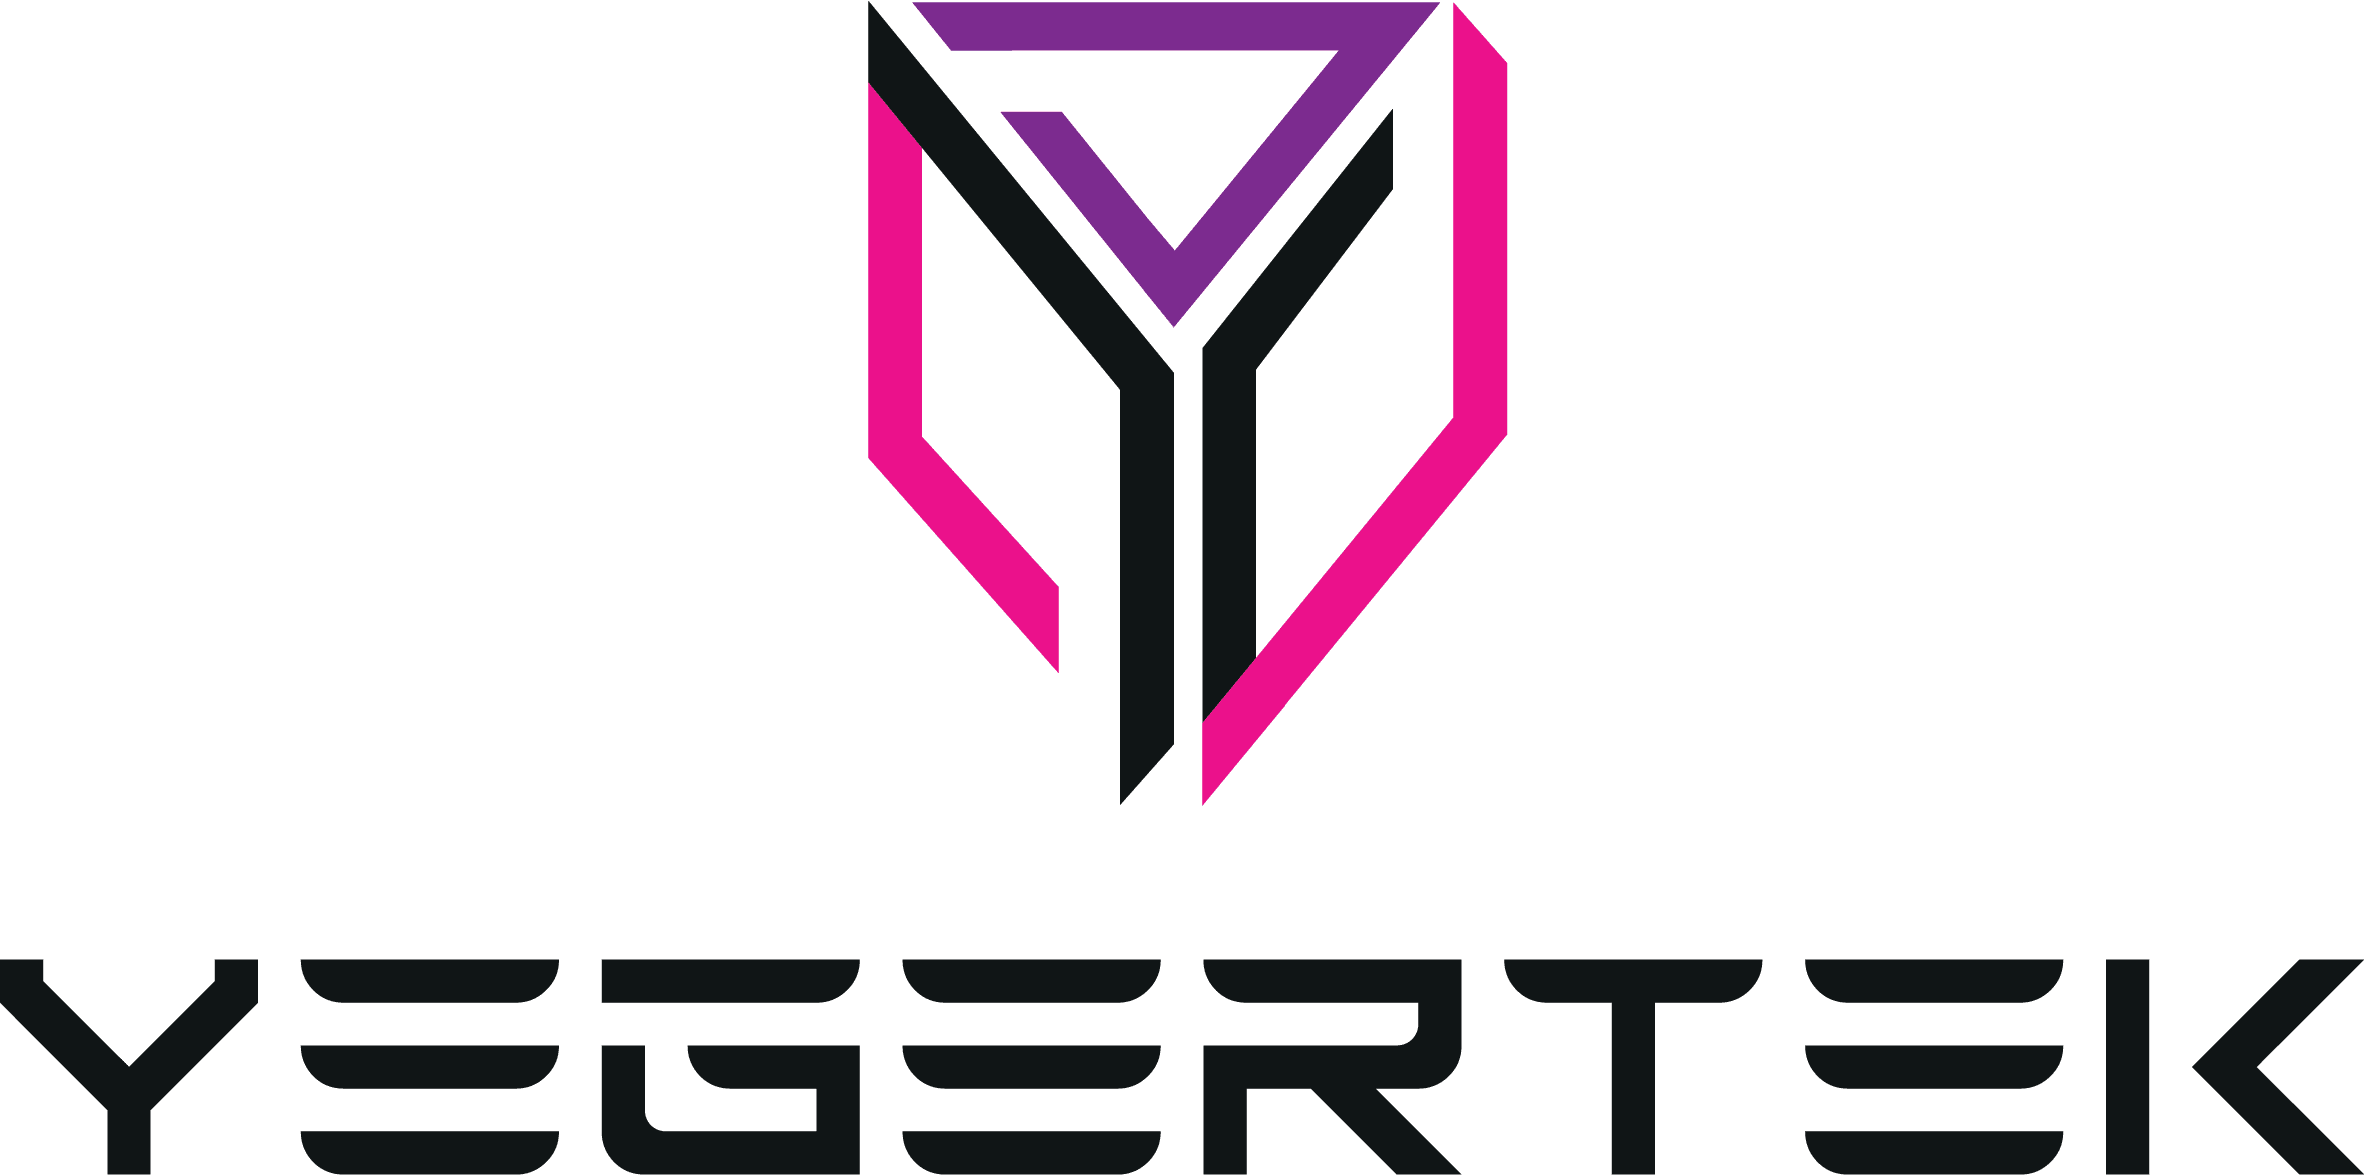 Yegertek - Loyalty Program Solutions